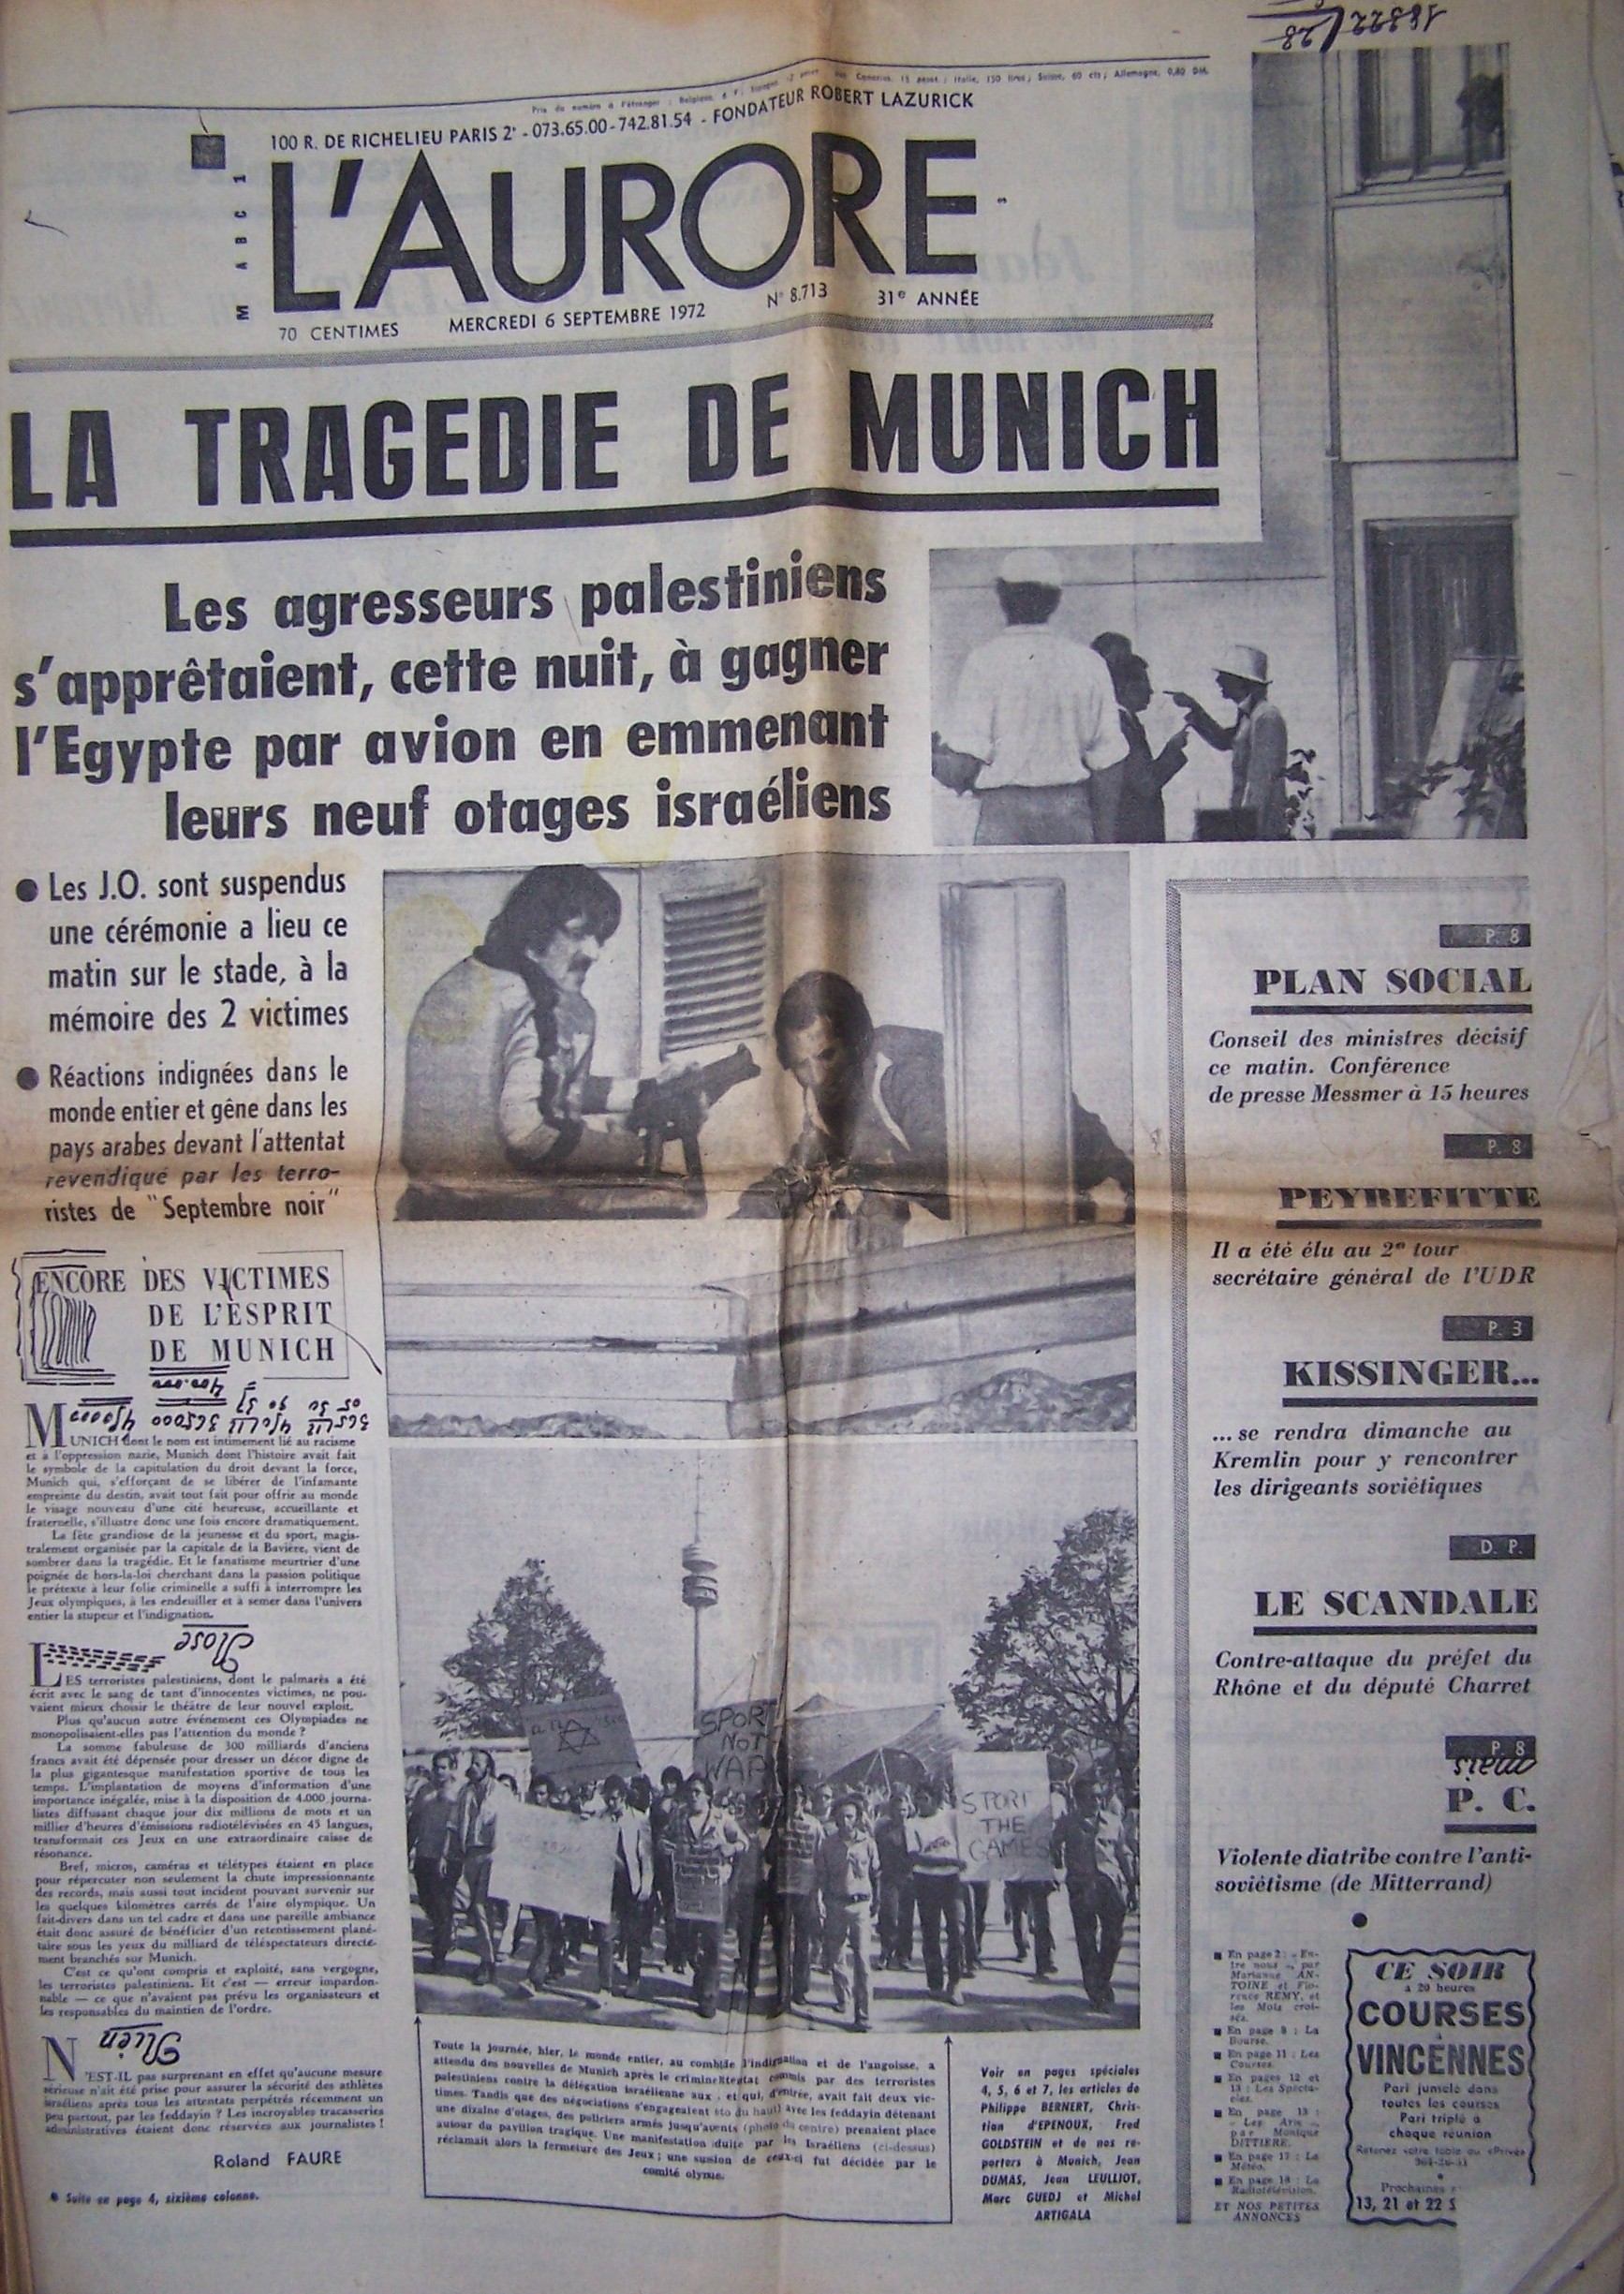 The tragedy of Munich
Again victims of Munich spirit
